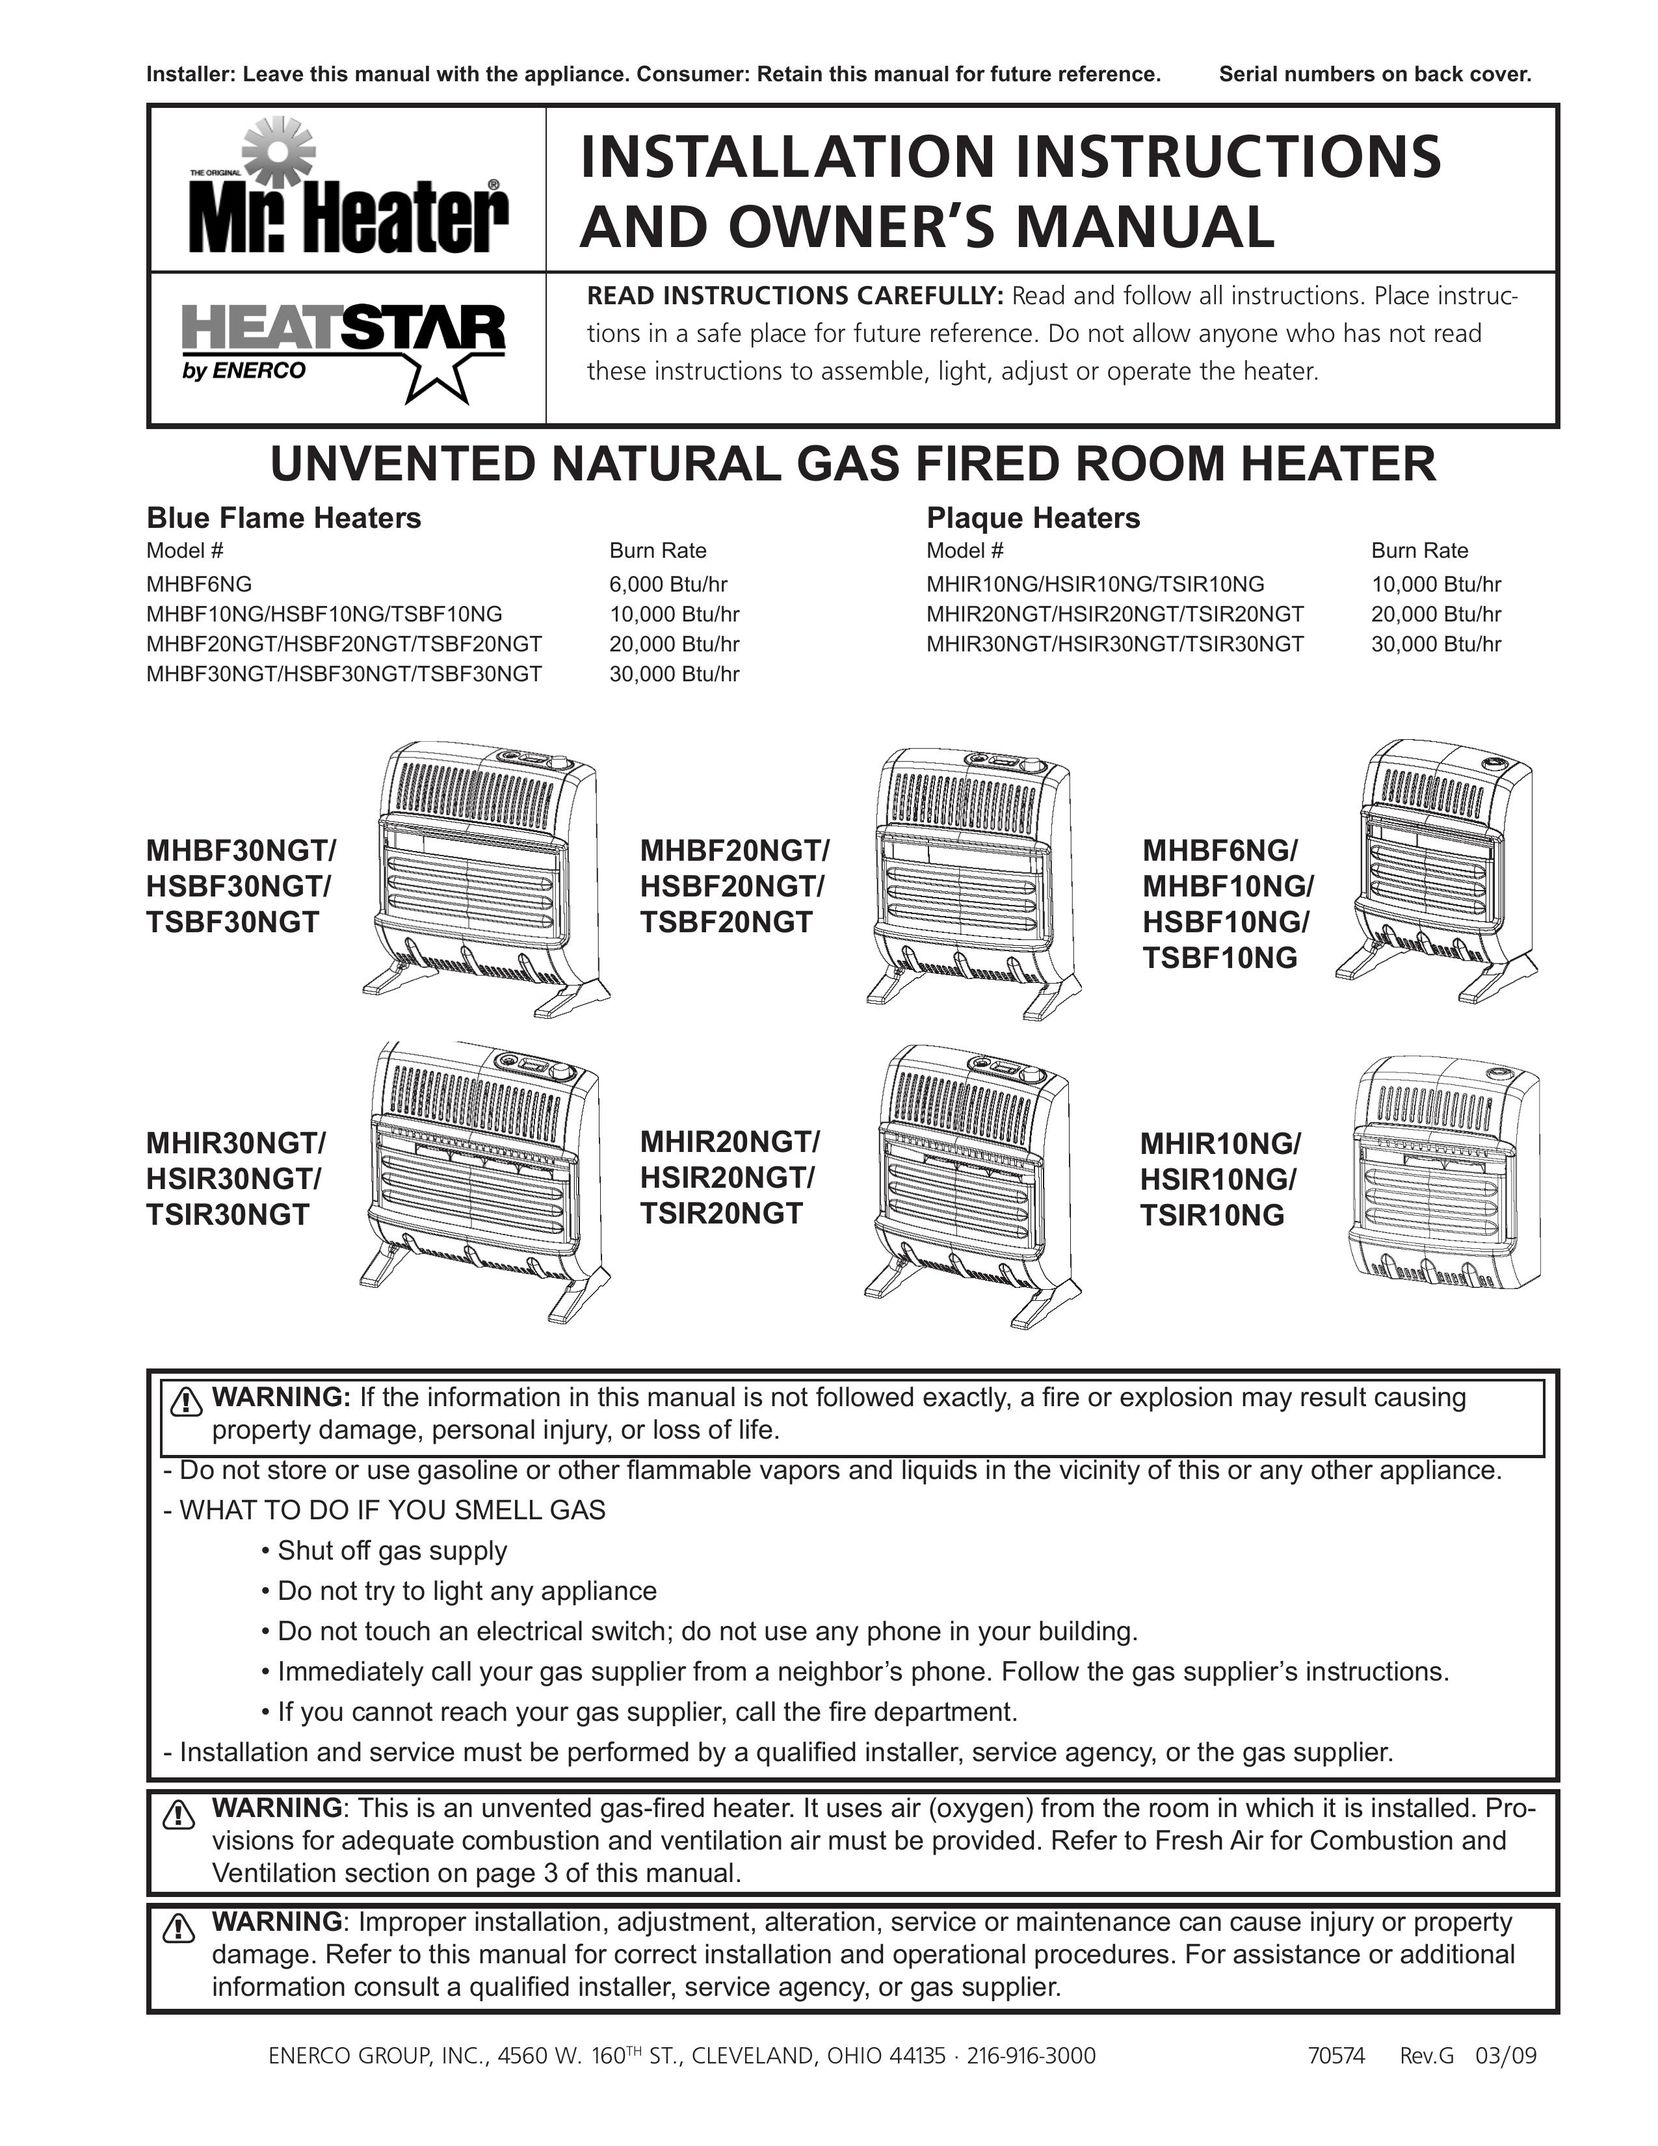 Enerco MHIR10NG Gas Heater User Manual